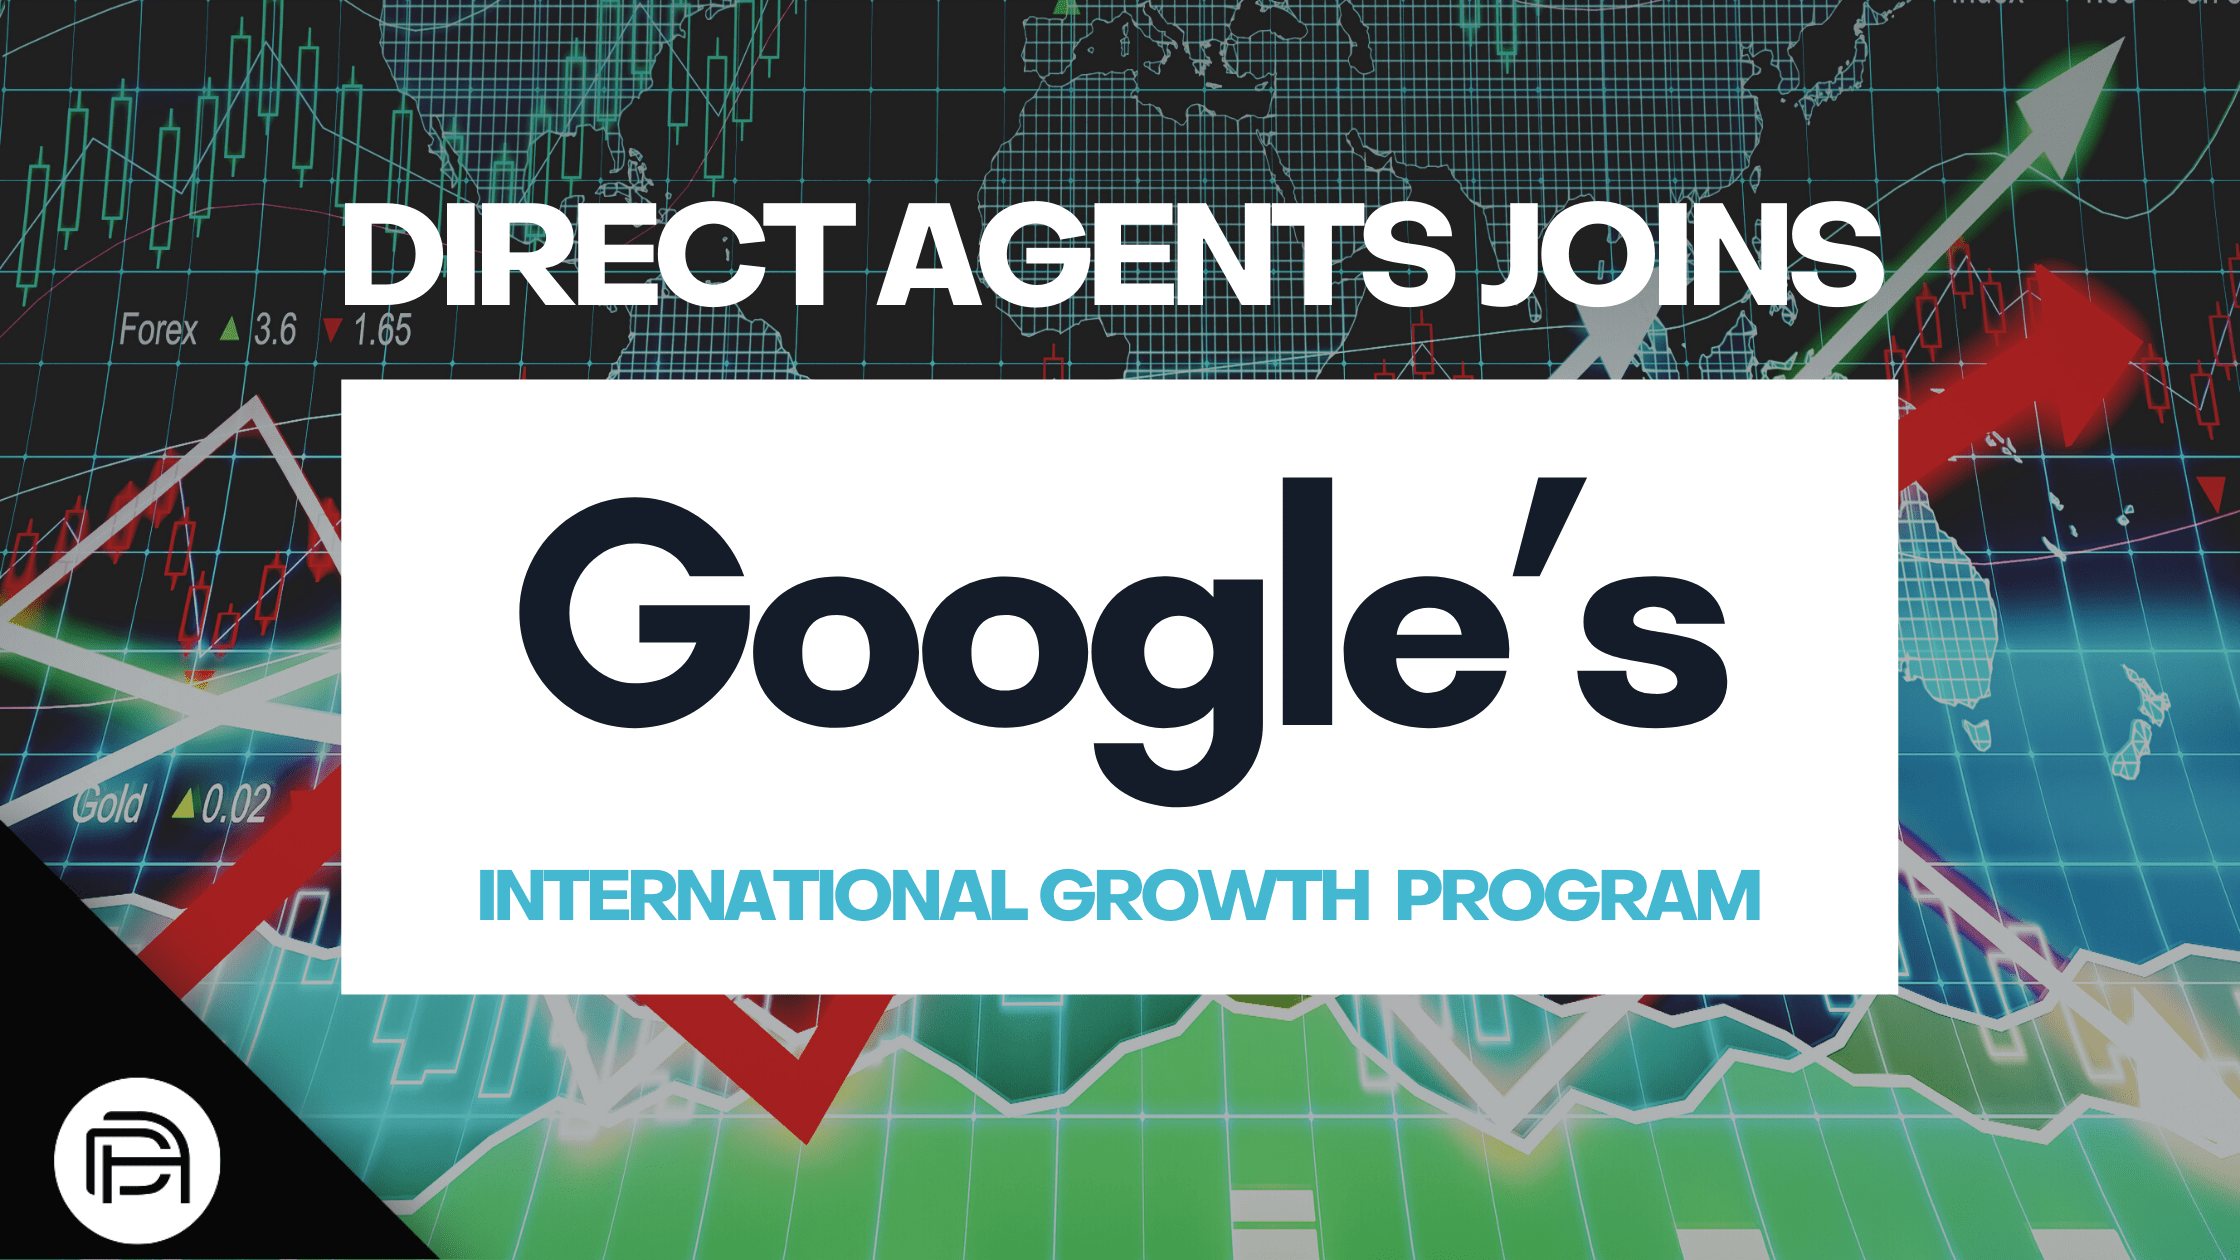 Direct Agents Joins Google’s International Growth Program